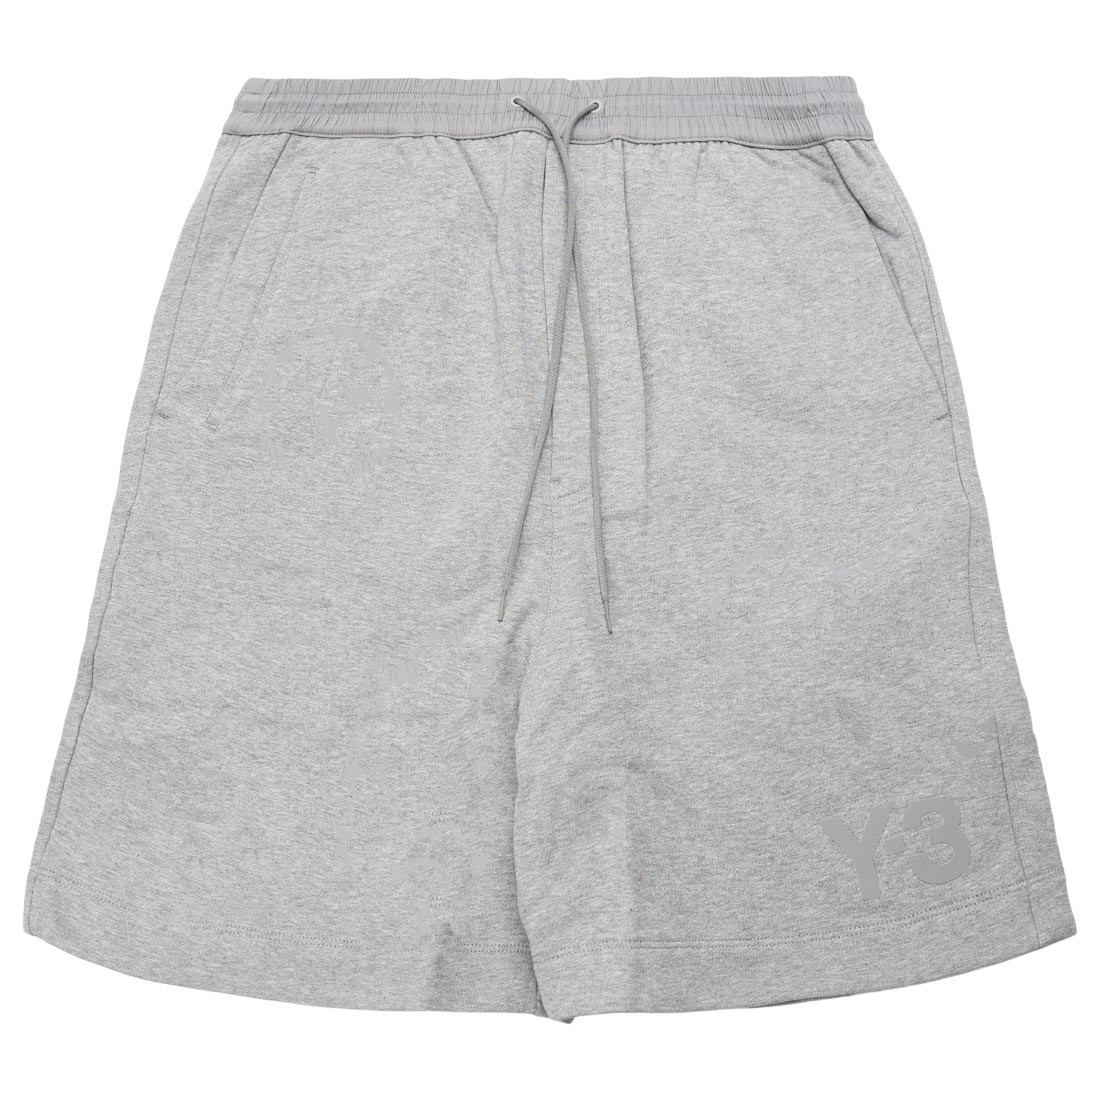 Adidas Y-3 Men Classic Terry Shorts (gray / medium grey heather)